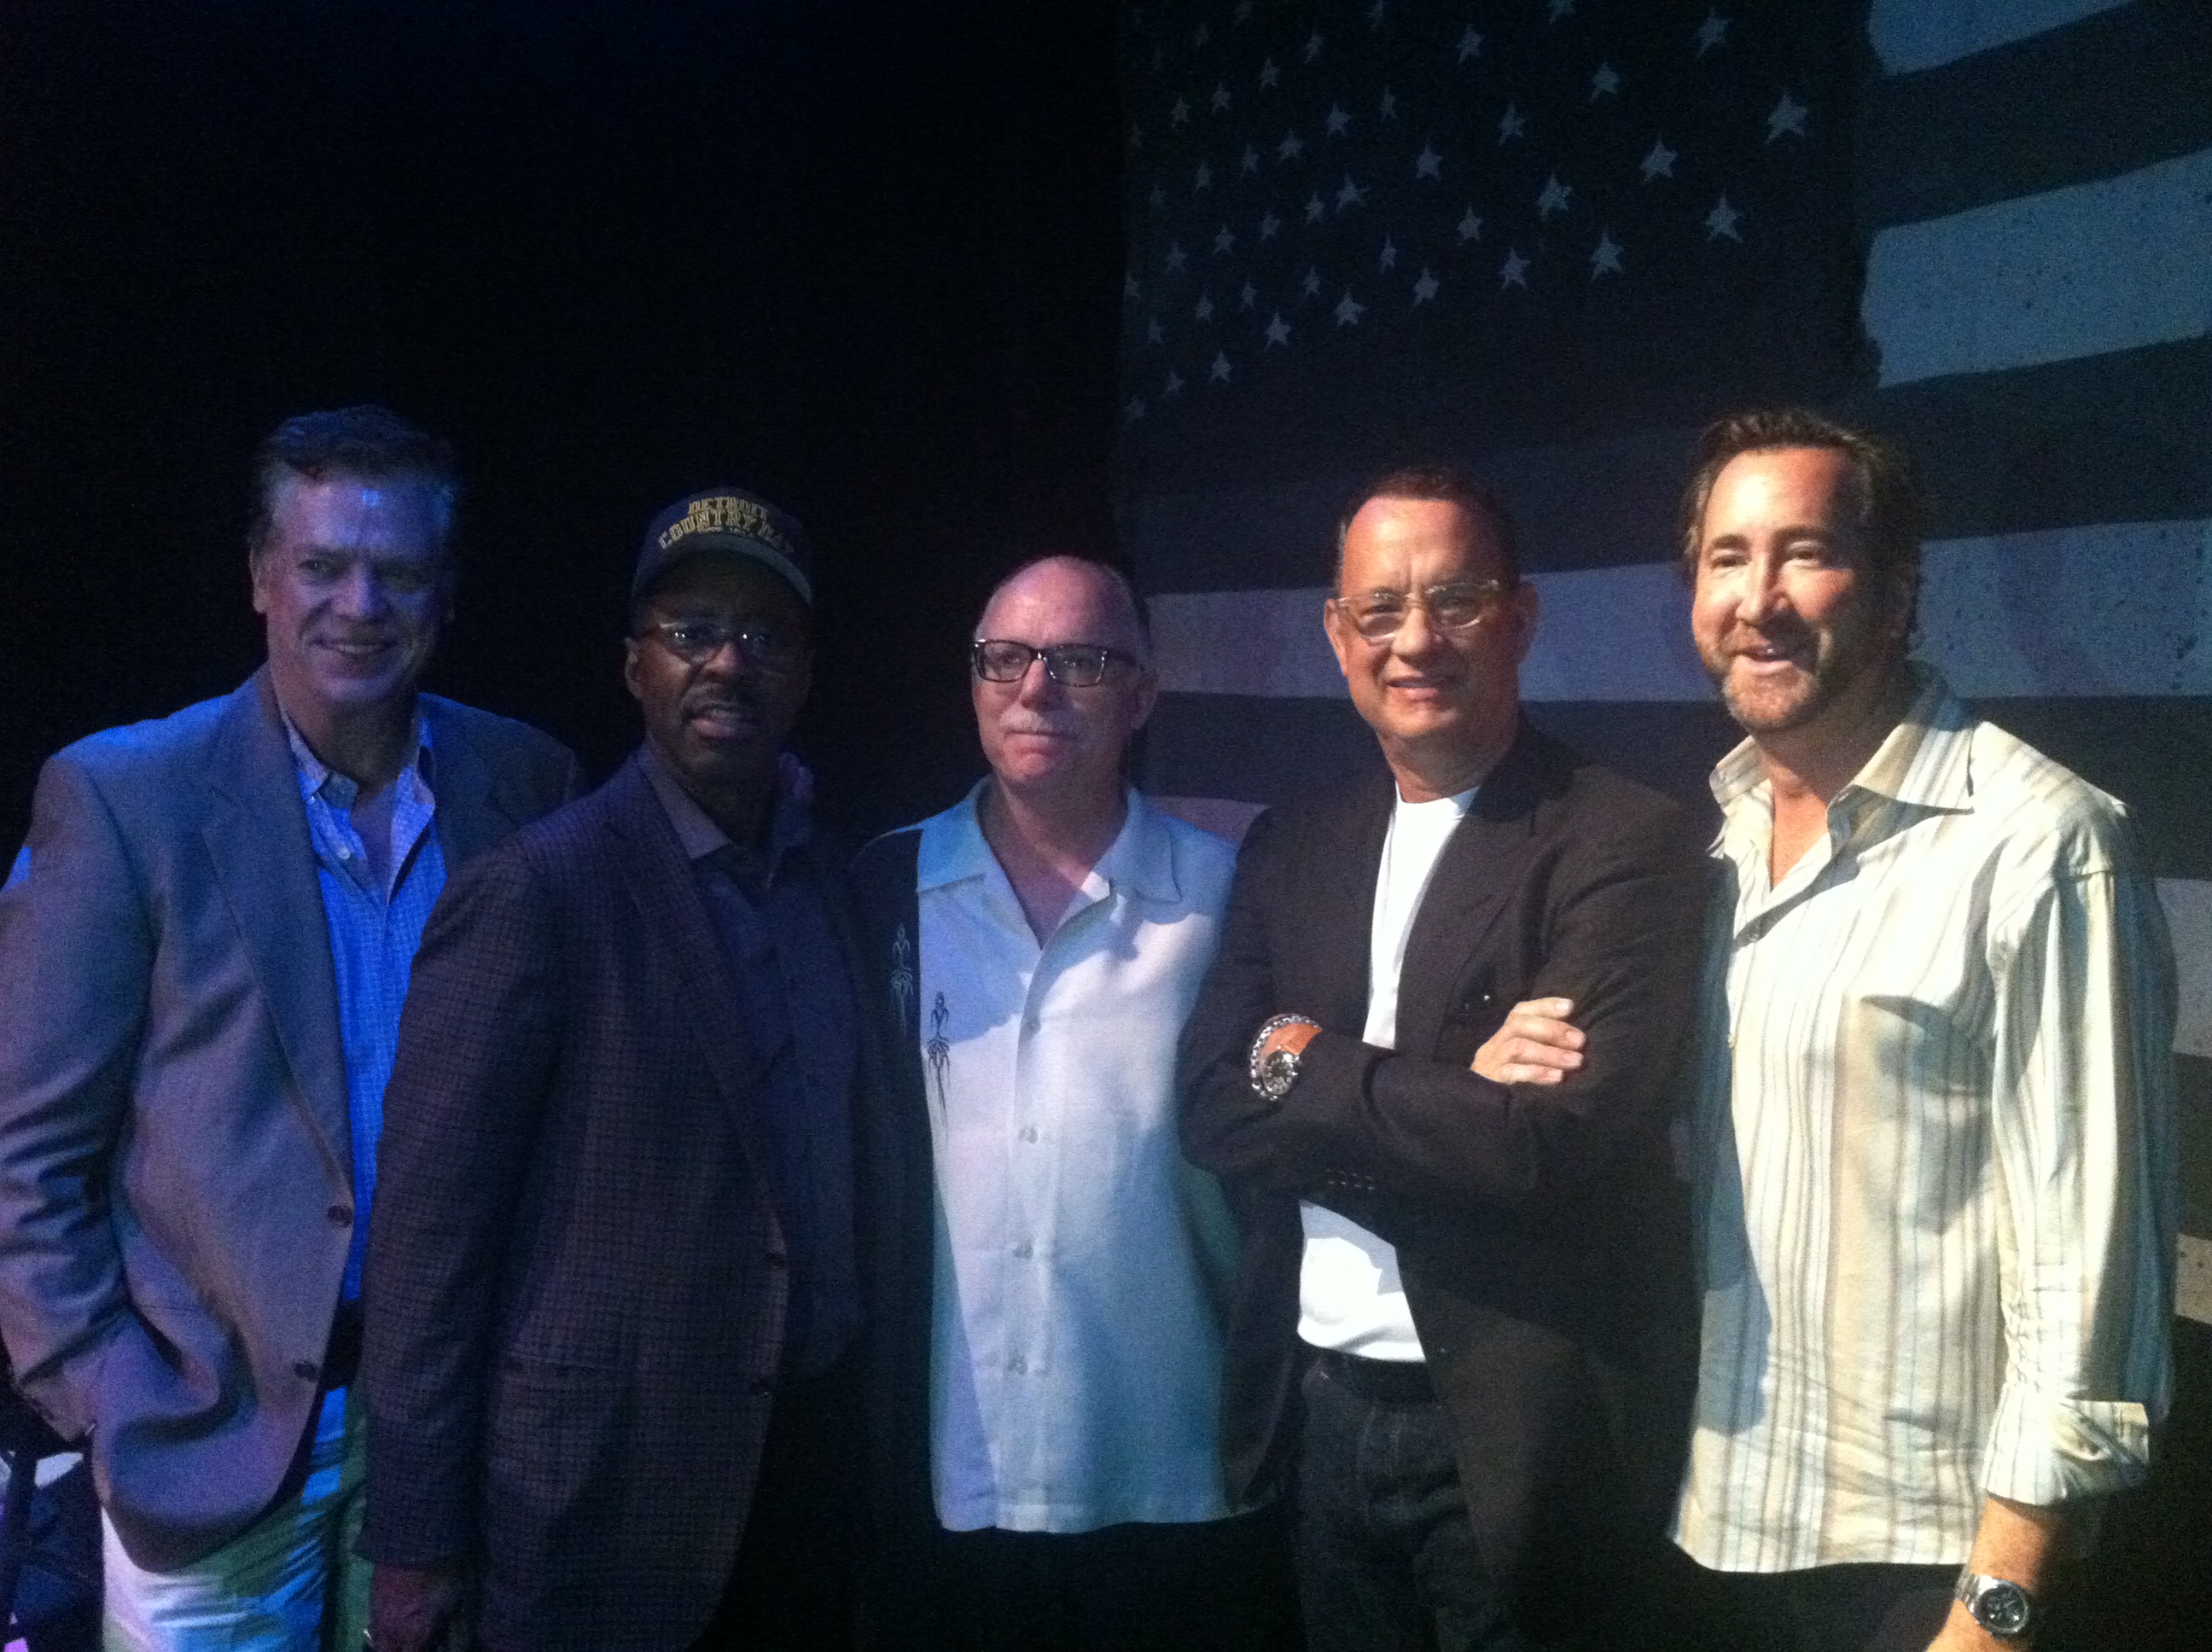 Tom Hanks, Courtney B. Vance, Chris McDonald, Bryan Rasmussen Whitefire Theatre in Sherman Oaks